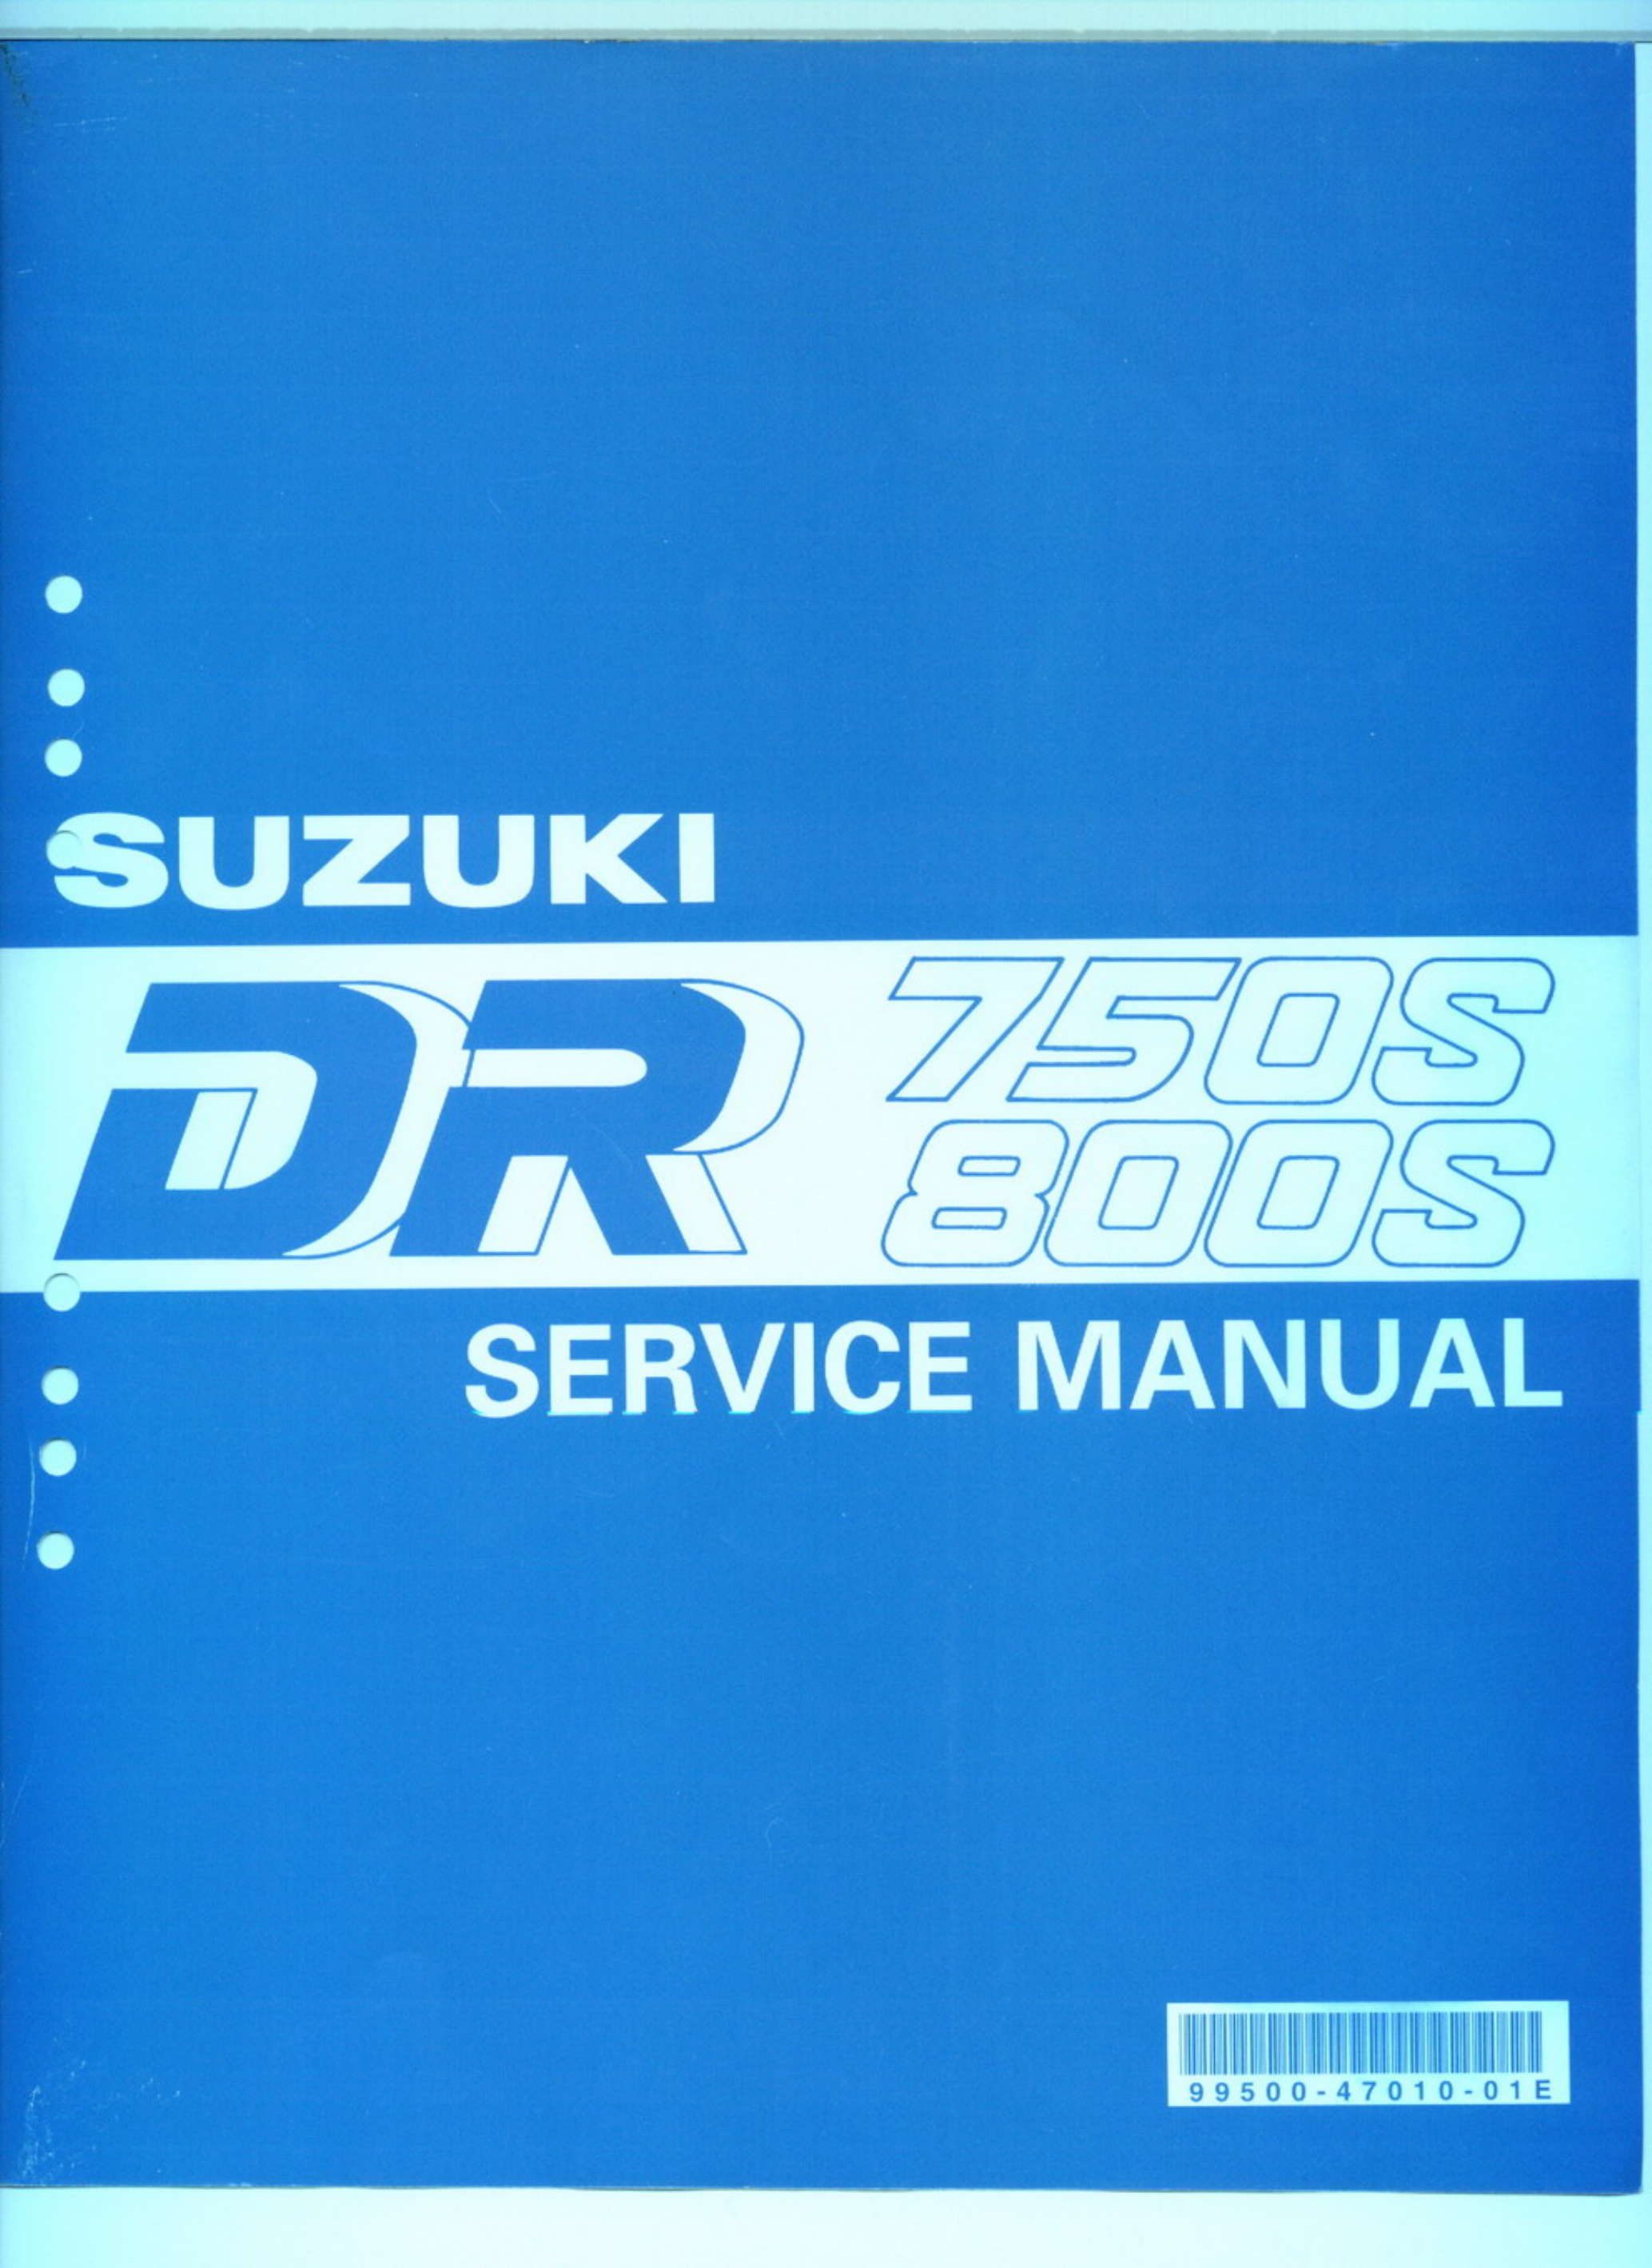 1988-1997 Suzuki DR750S, DR800S, DR750, DR800 service manual Preview image 1